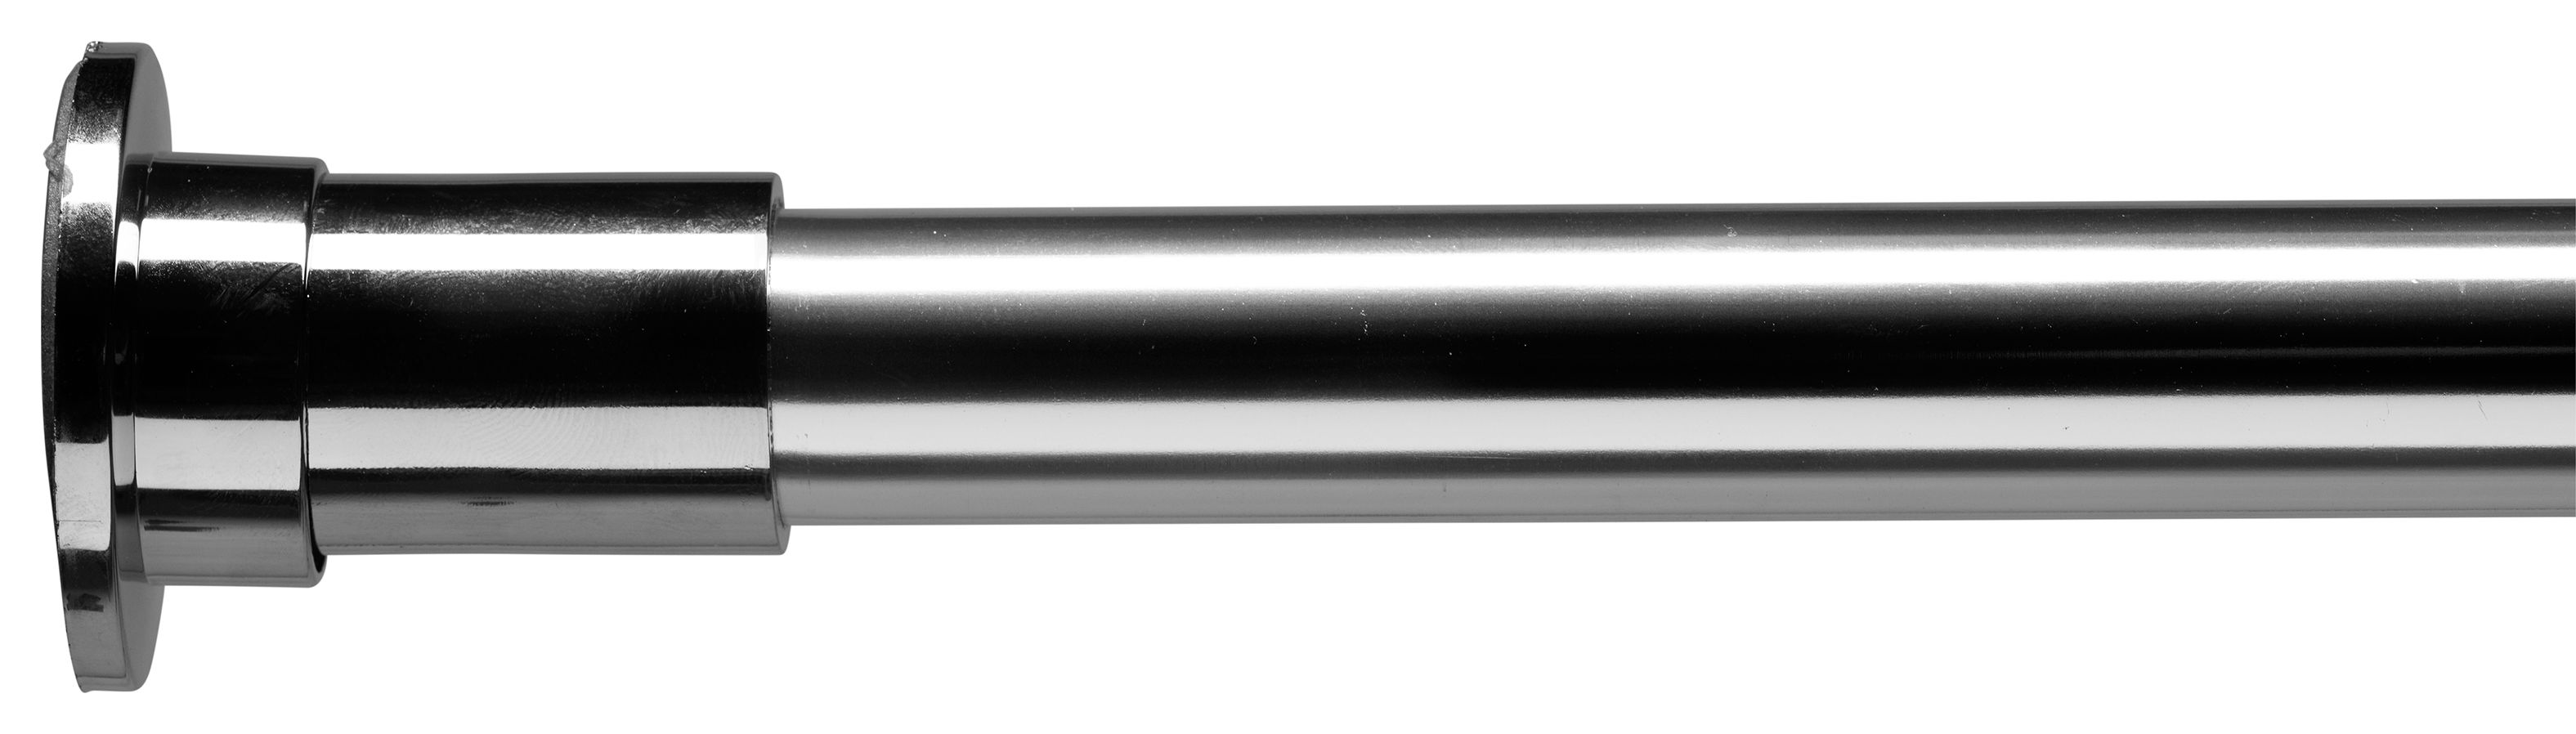 Croydex Stick 'n' Lock™ Shower Curtain Rod 8ft 6in - Chrome